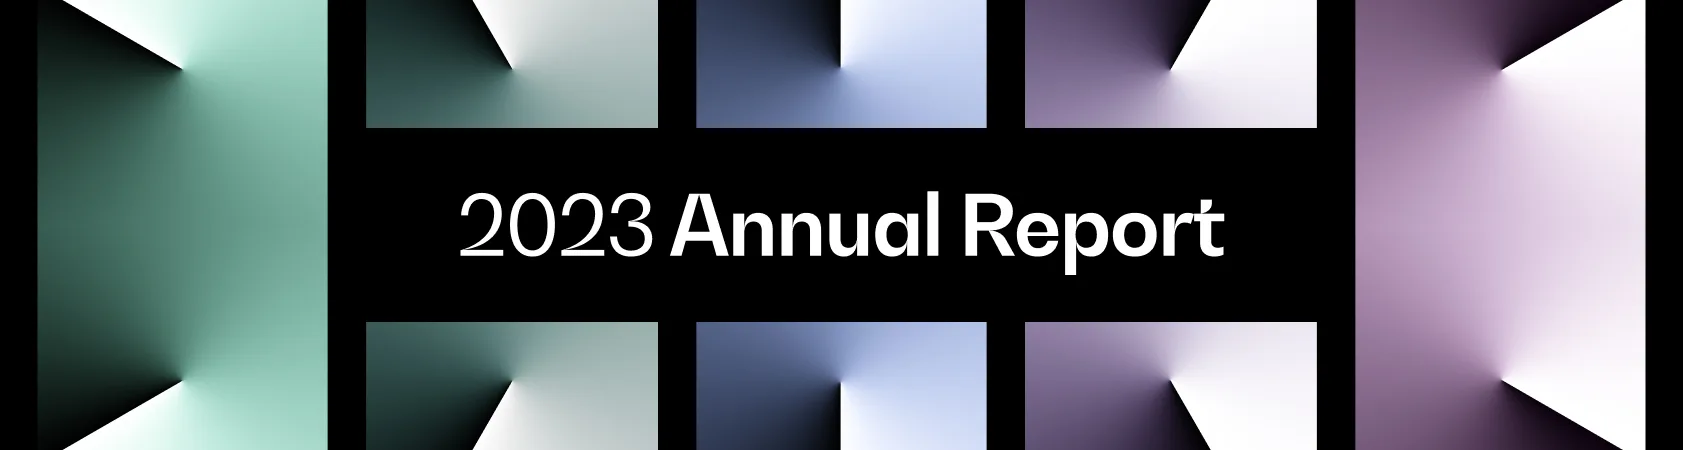 2023 Annual Report Blog